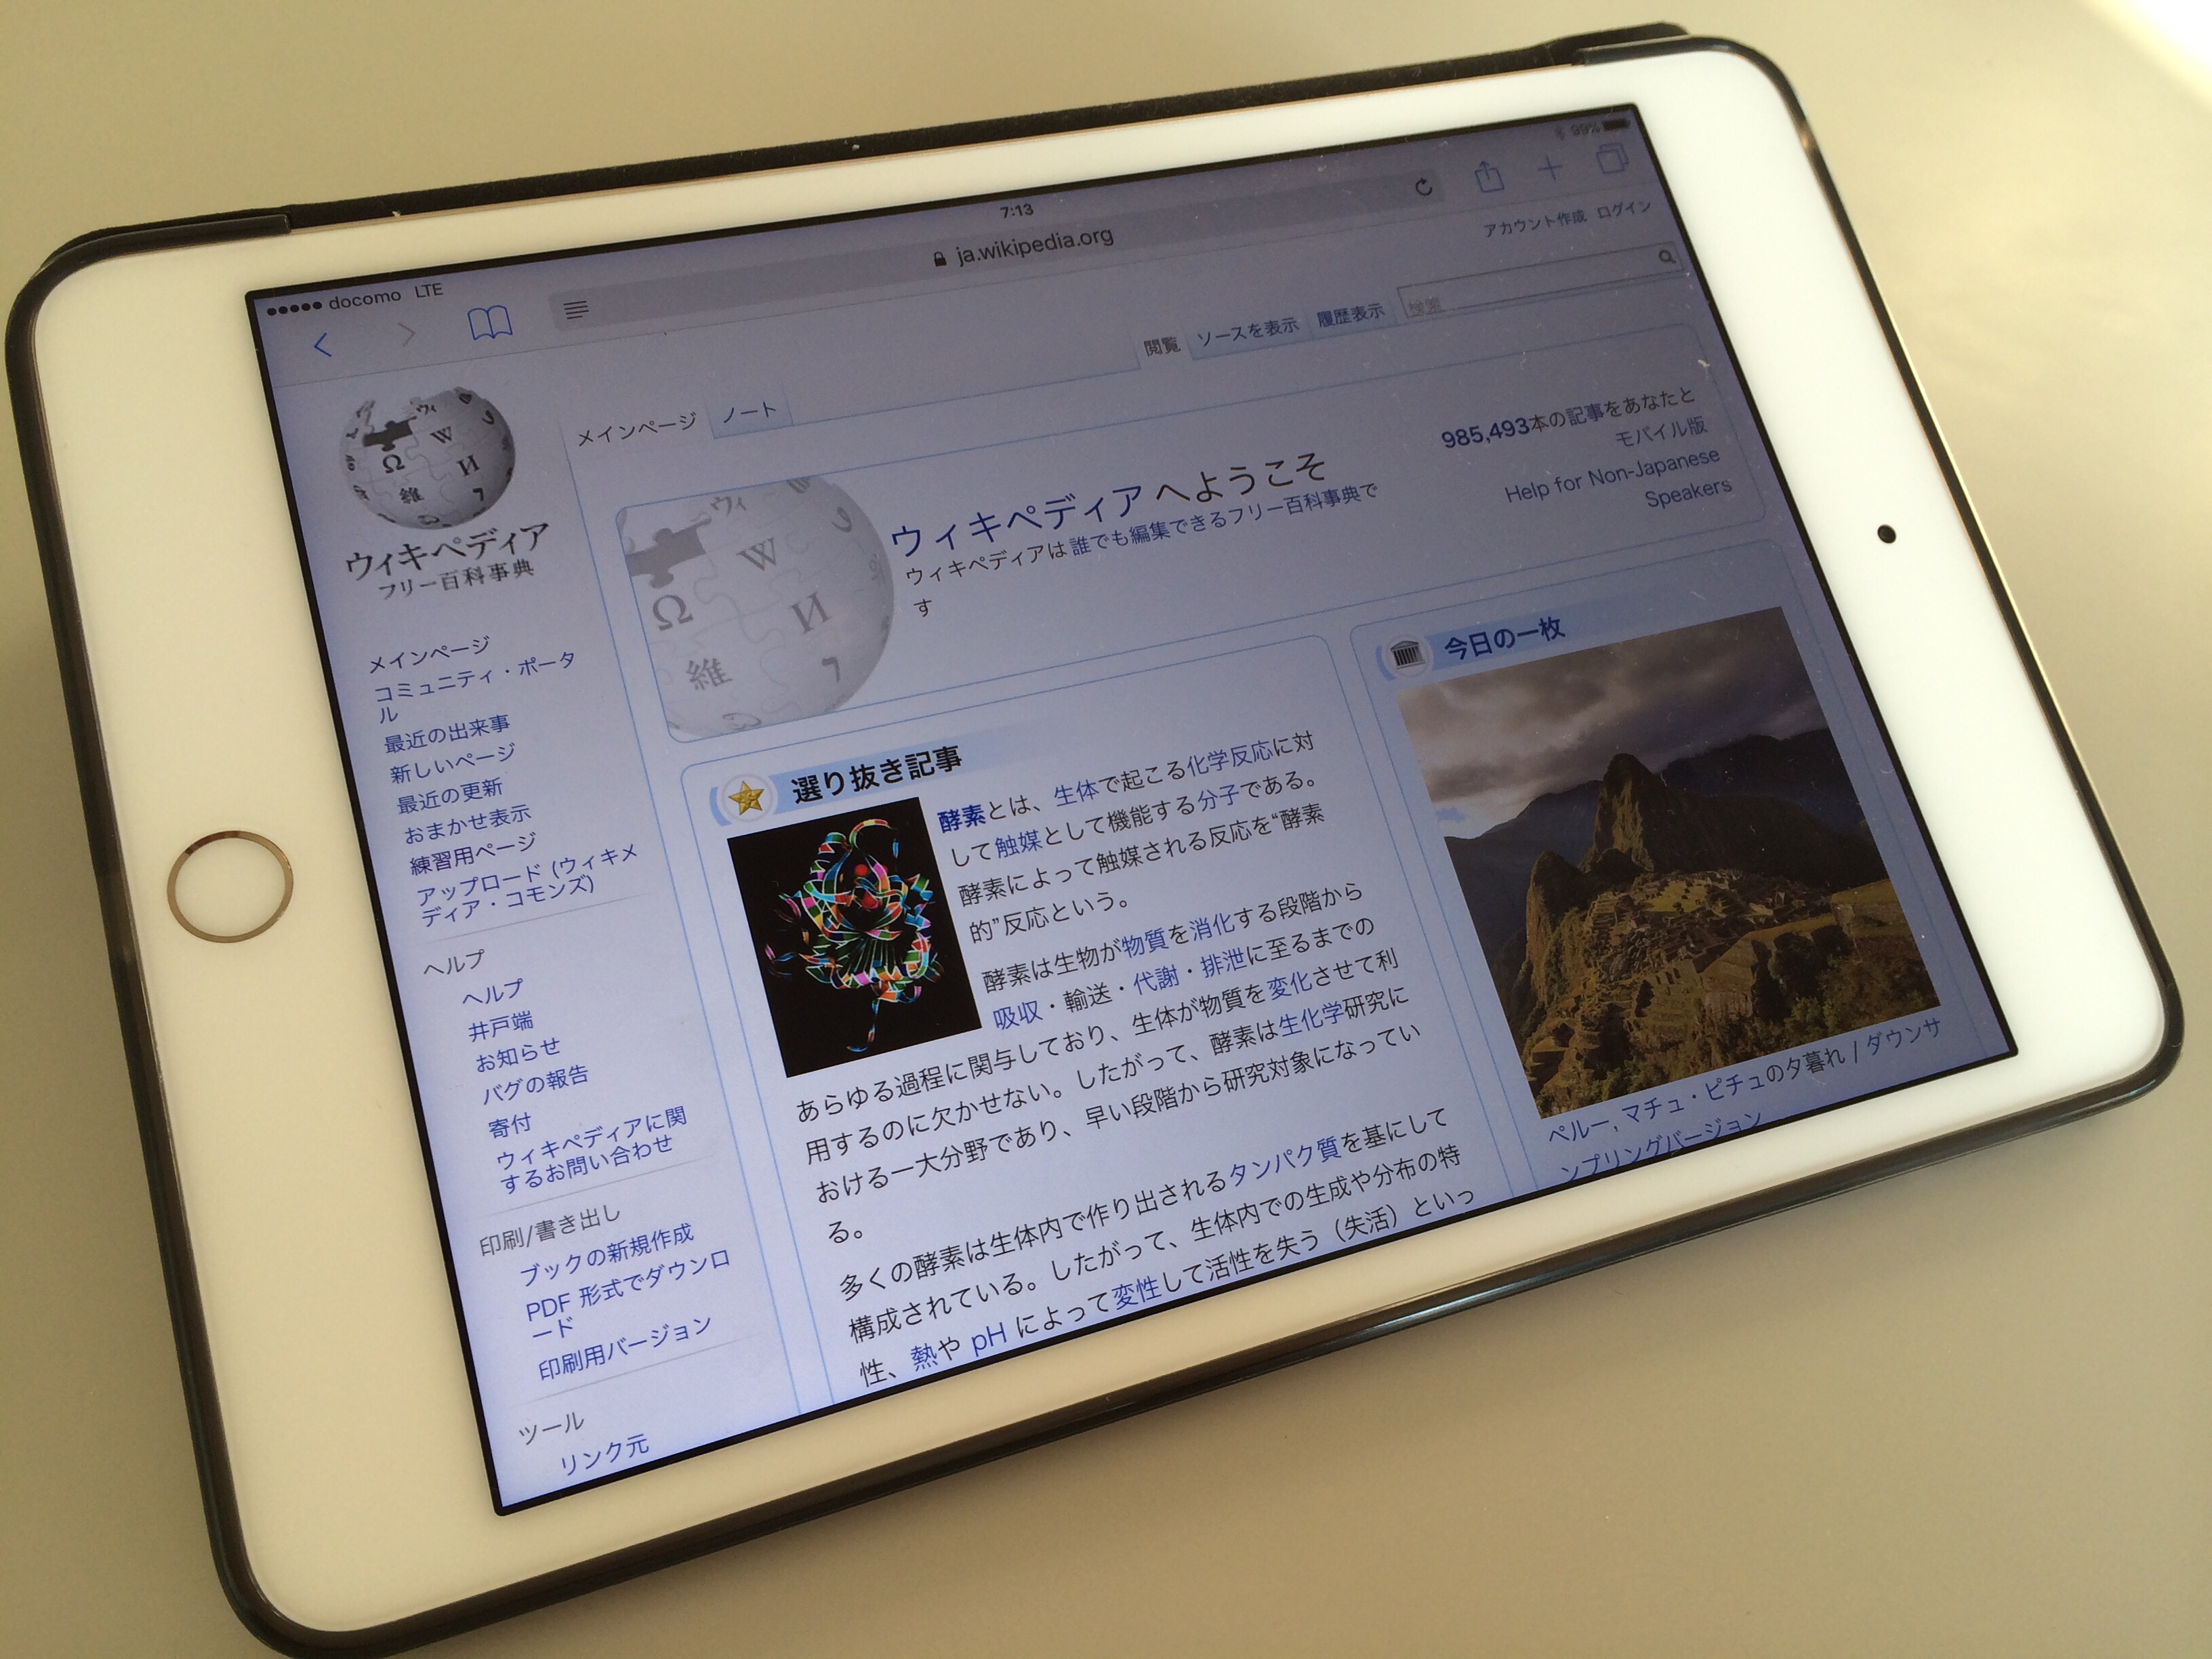 iPad mini 4 - Wikipedia